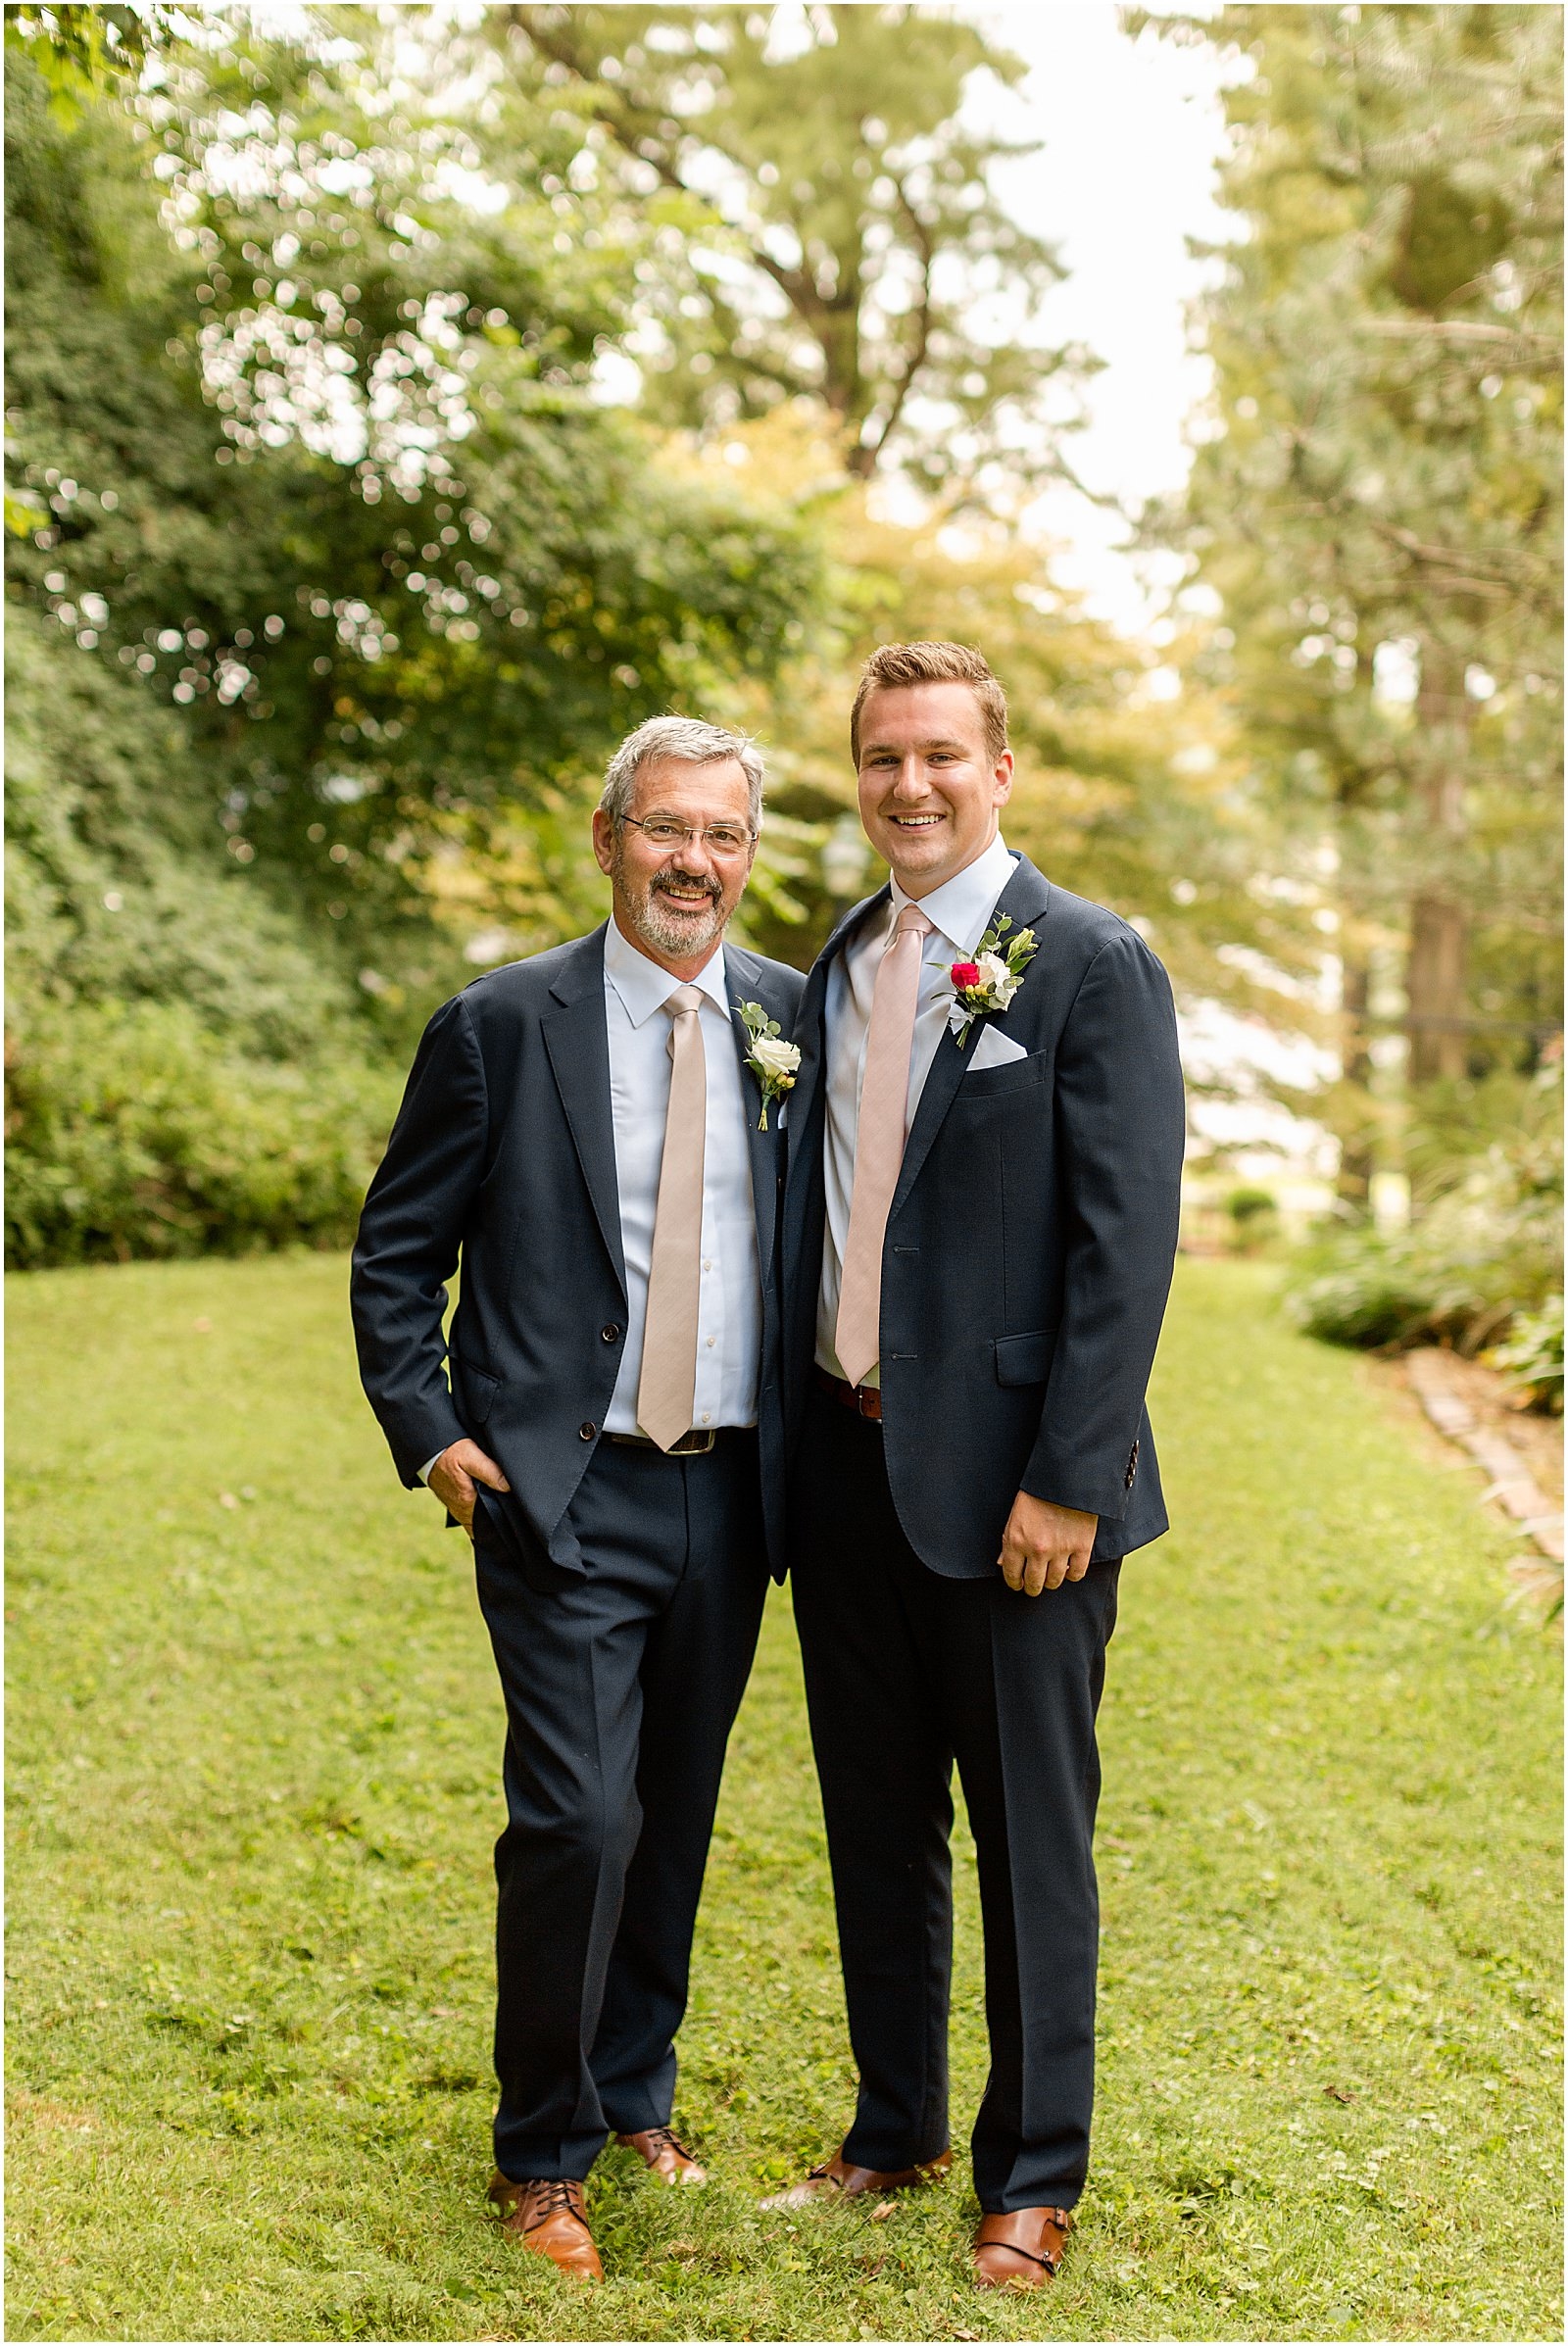 An Evansville Country Club Wedding | Madison and Christiaan | Bret and Brandie | Evansville Photographers | @bretandbrandie-0067.jpg